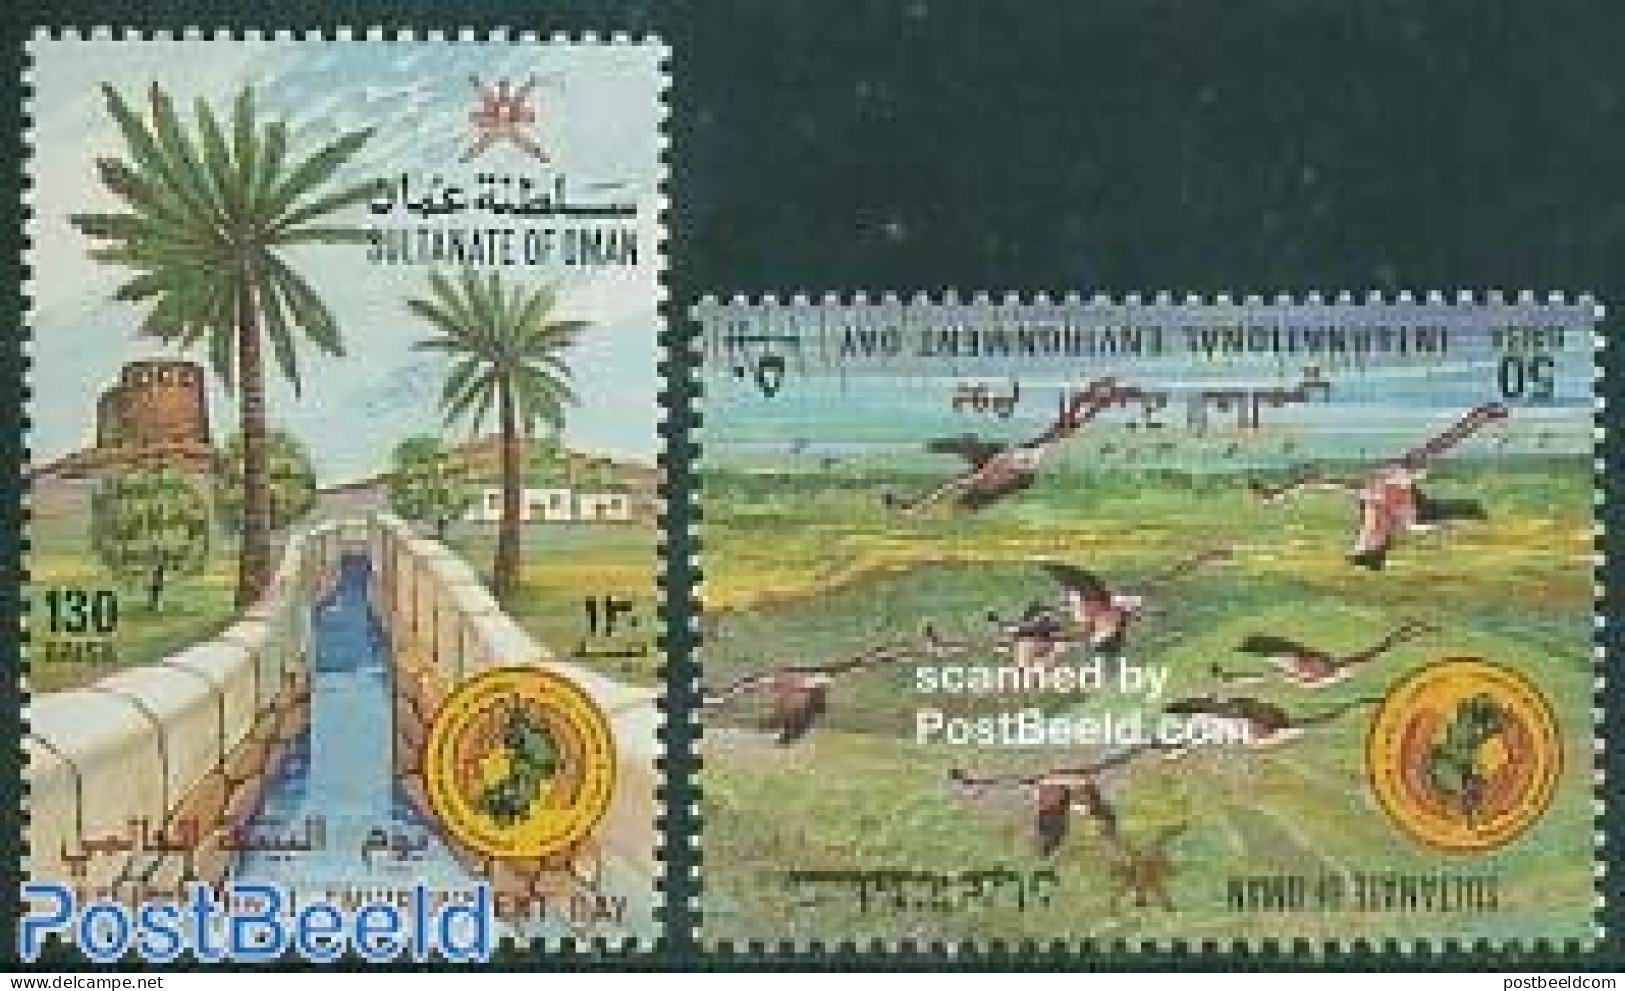 Oman 1987 Environment Day 2v, Mint NH, Nature - Birds - Environment - Flamingo - Environment & Climate Protection